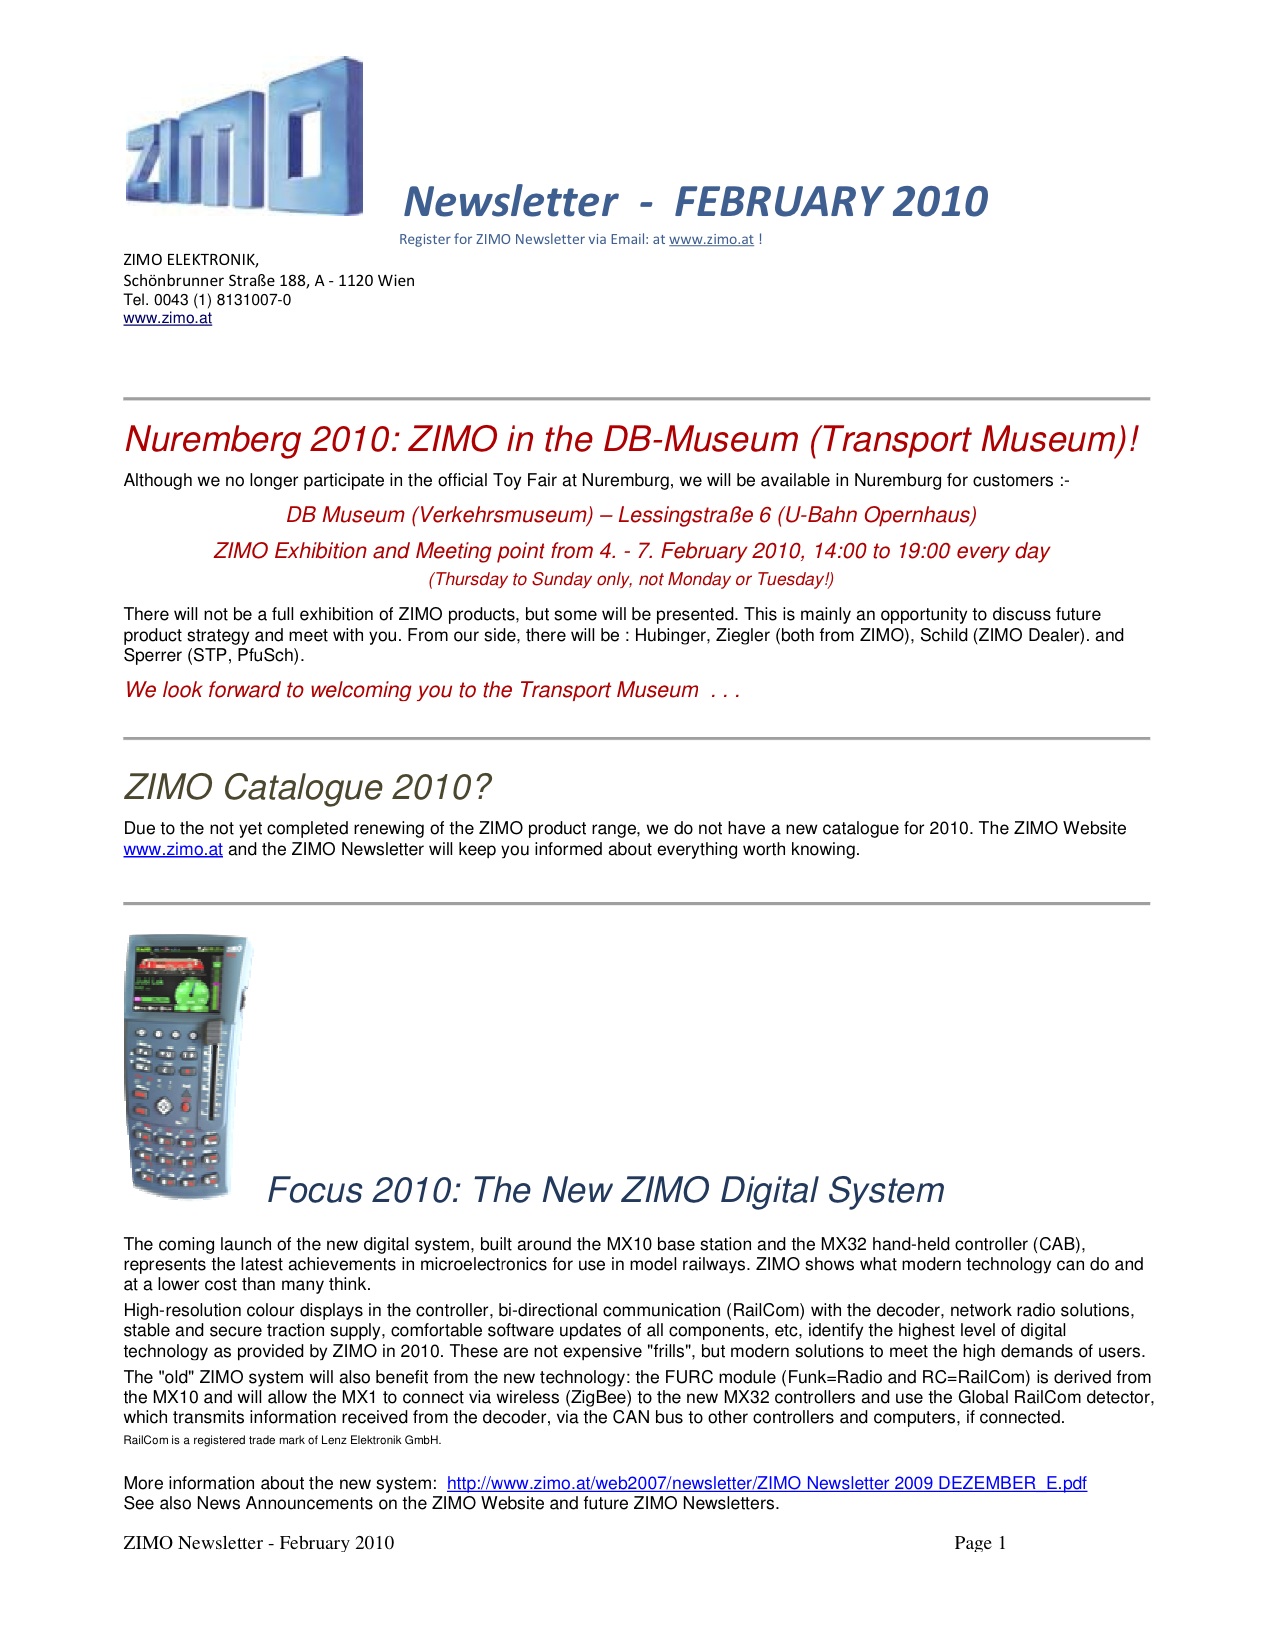 Zimo Newsletter - 2010-02 February (English)